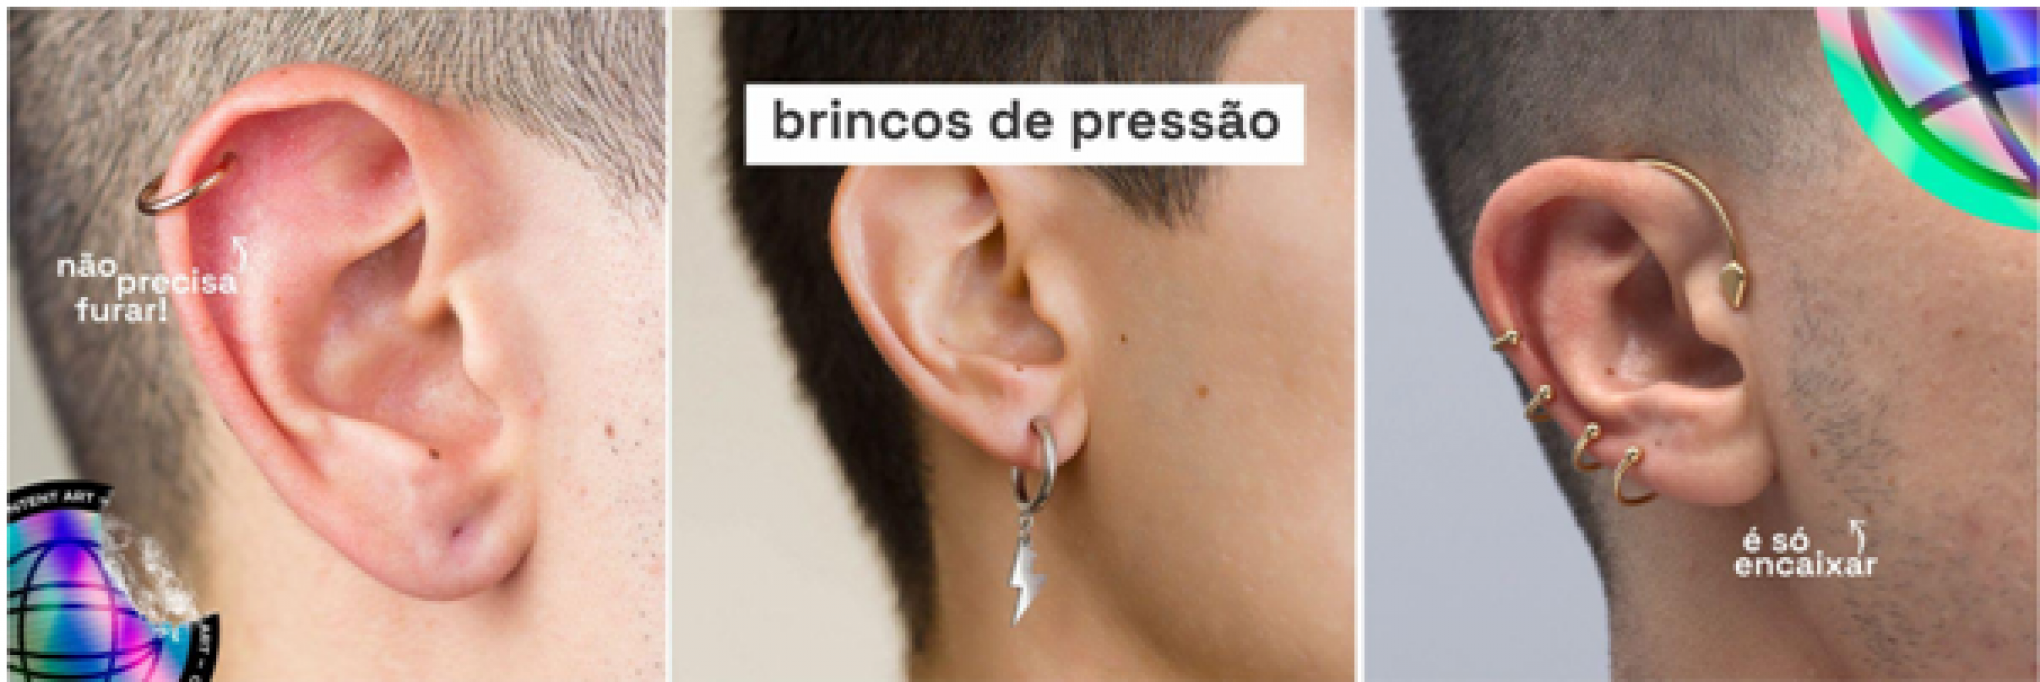 Piercings de pressão - CODE Brincos